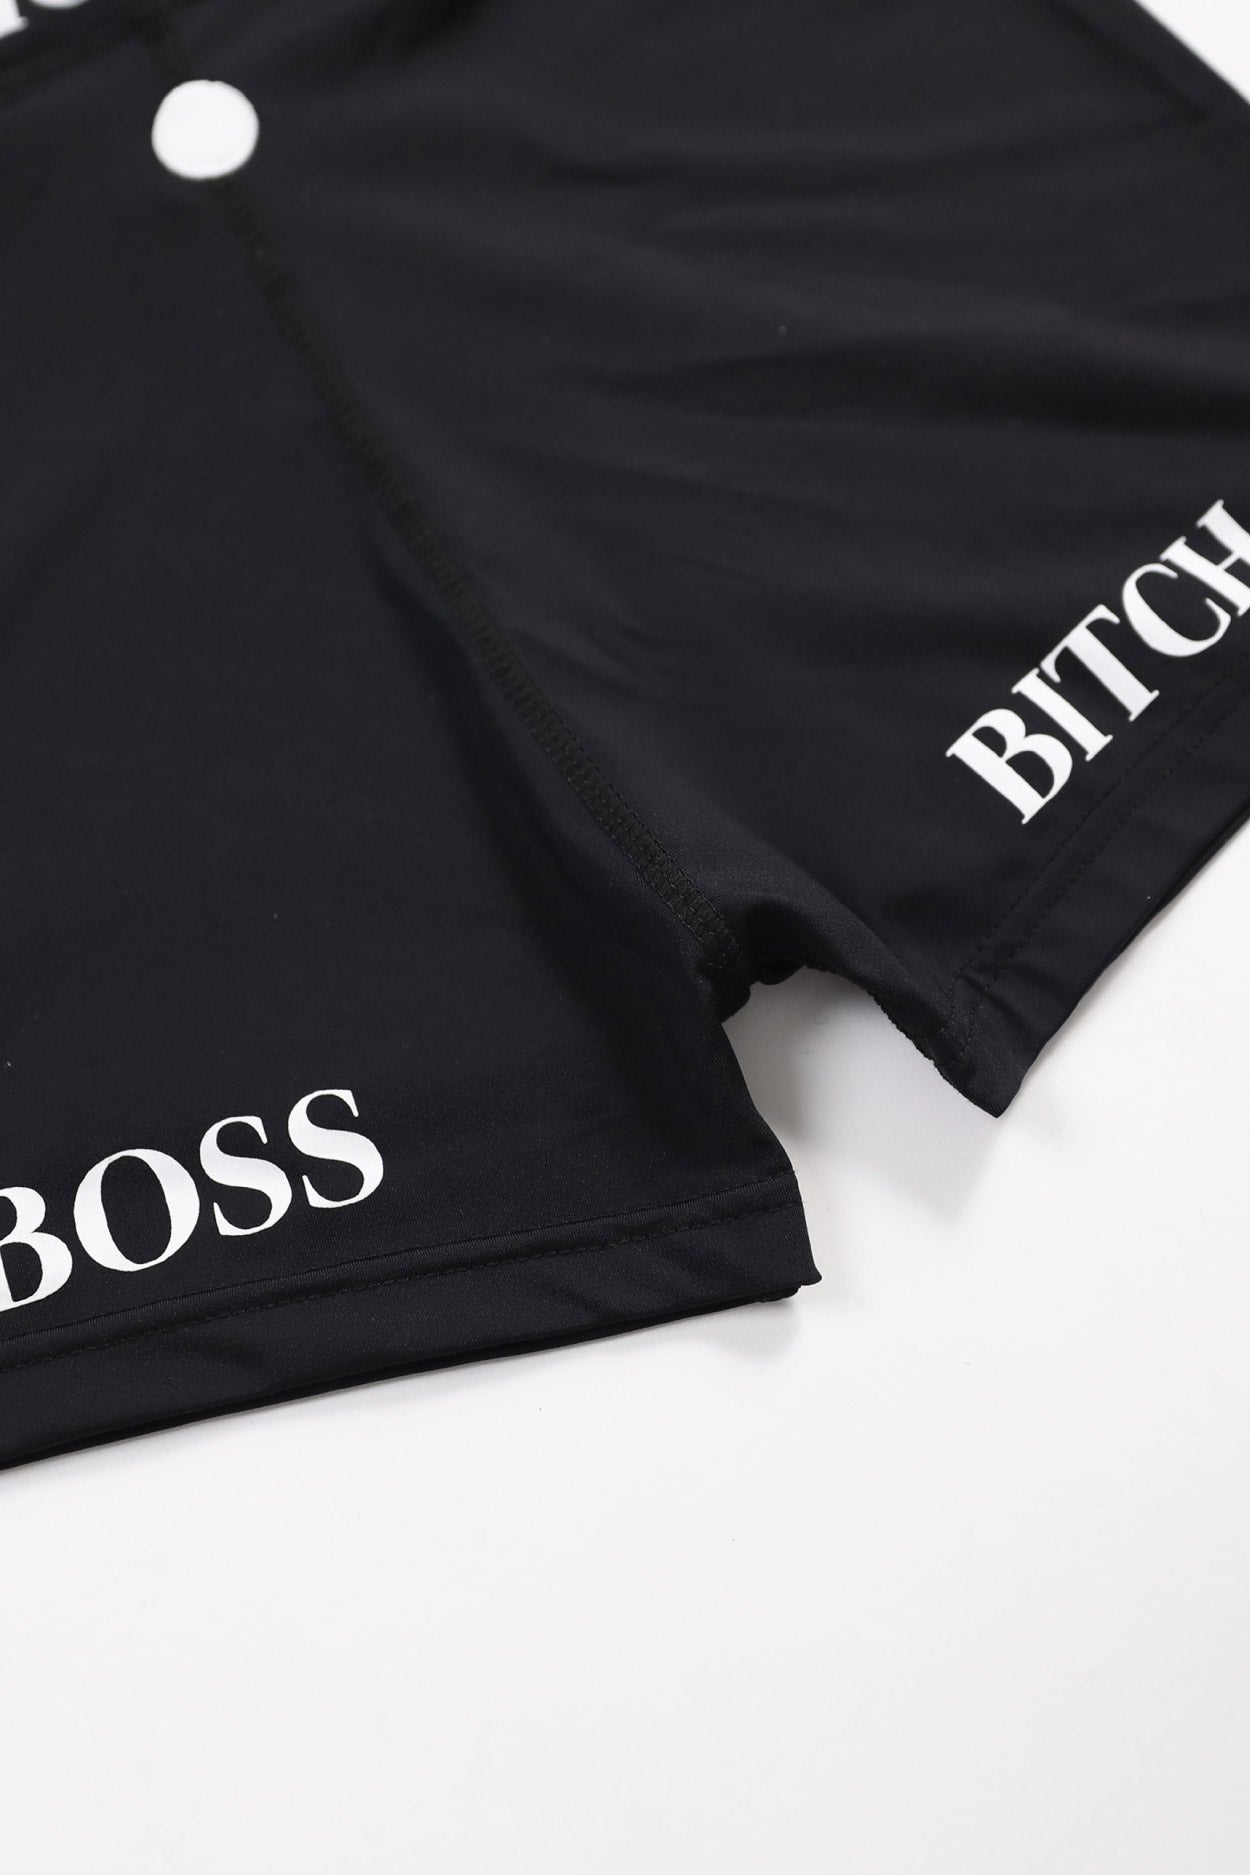 Badblood Boss Mode Boy Shorts Black